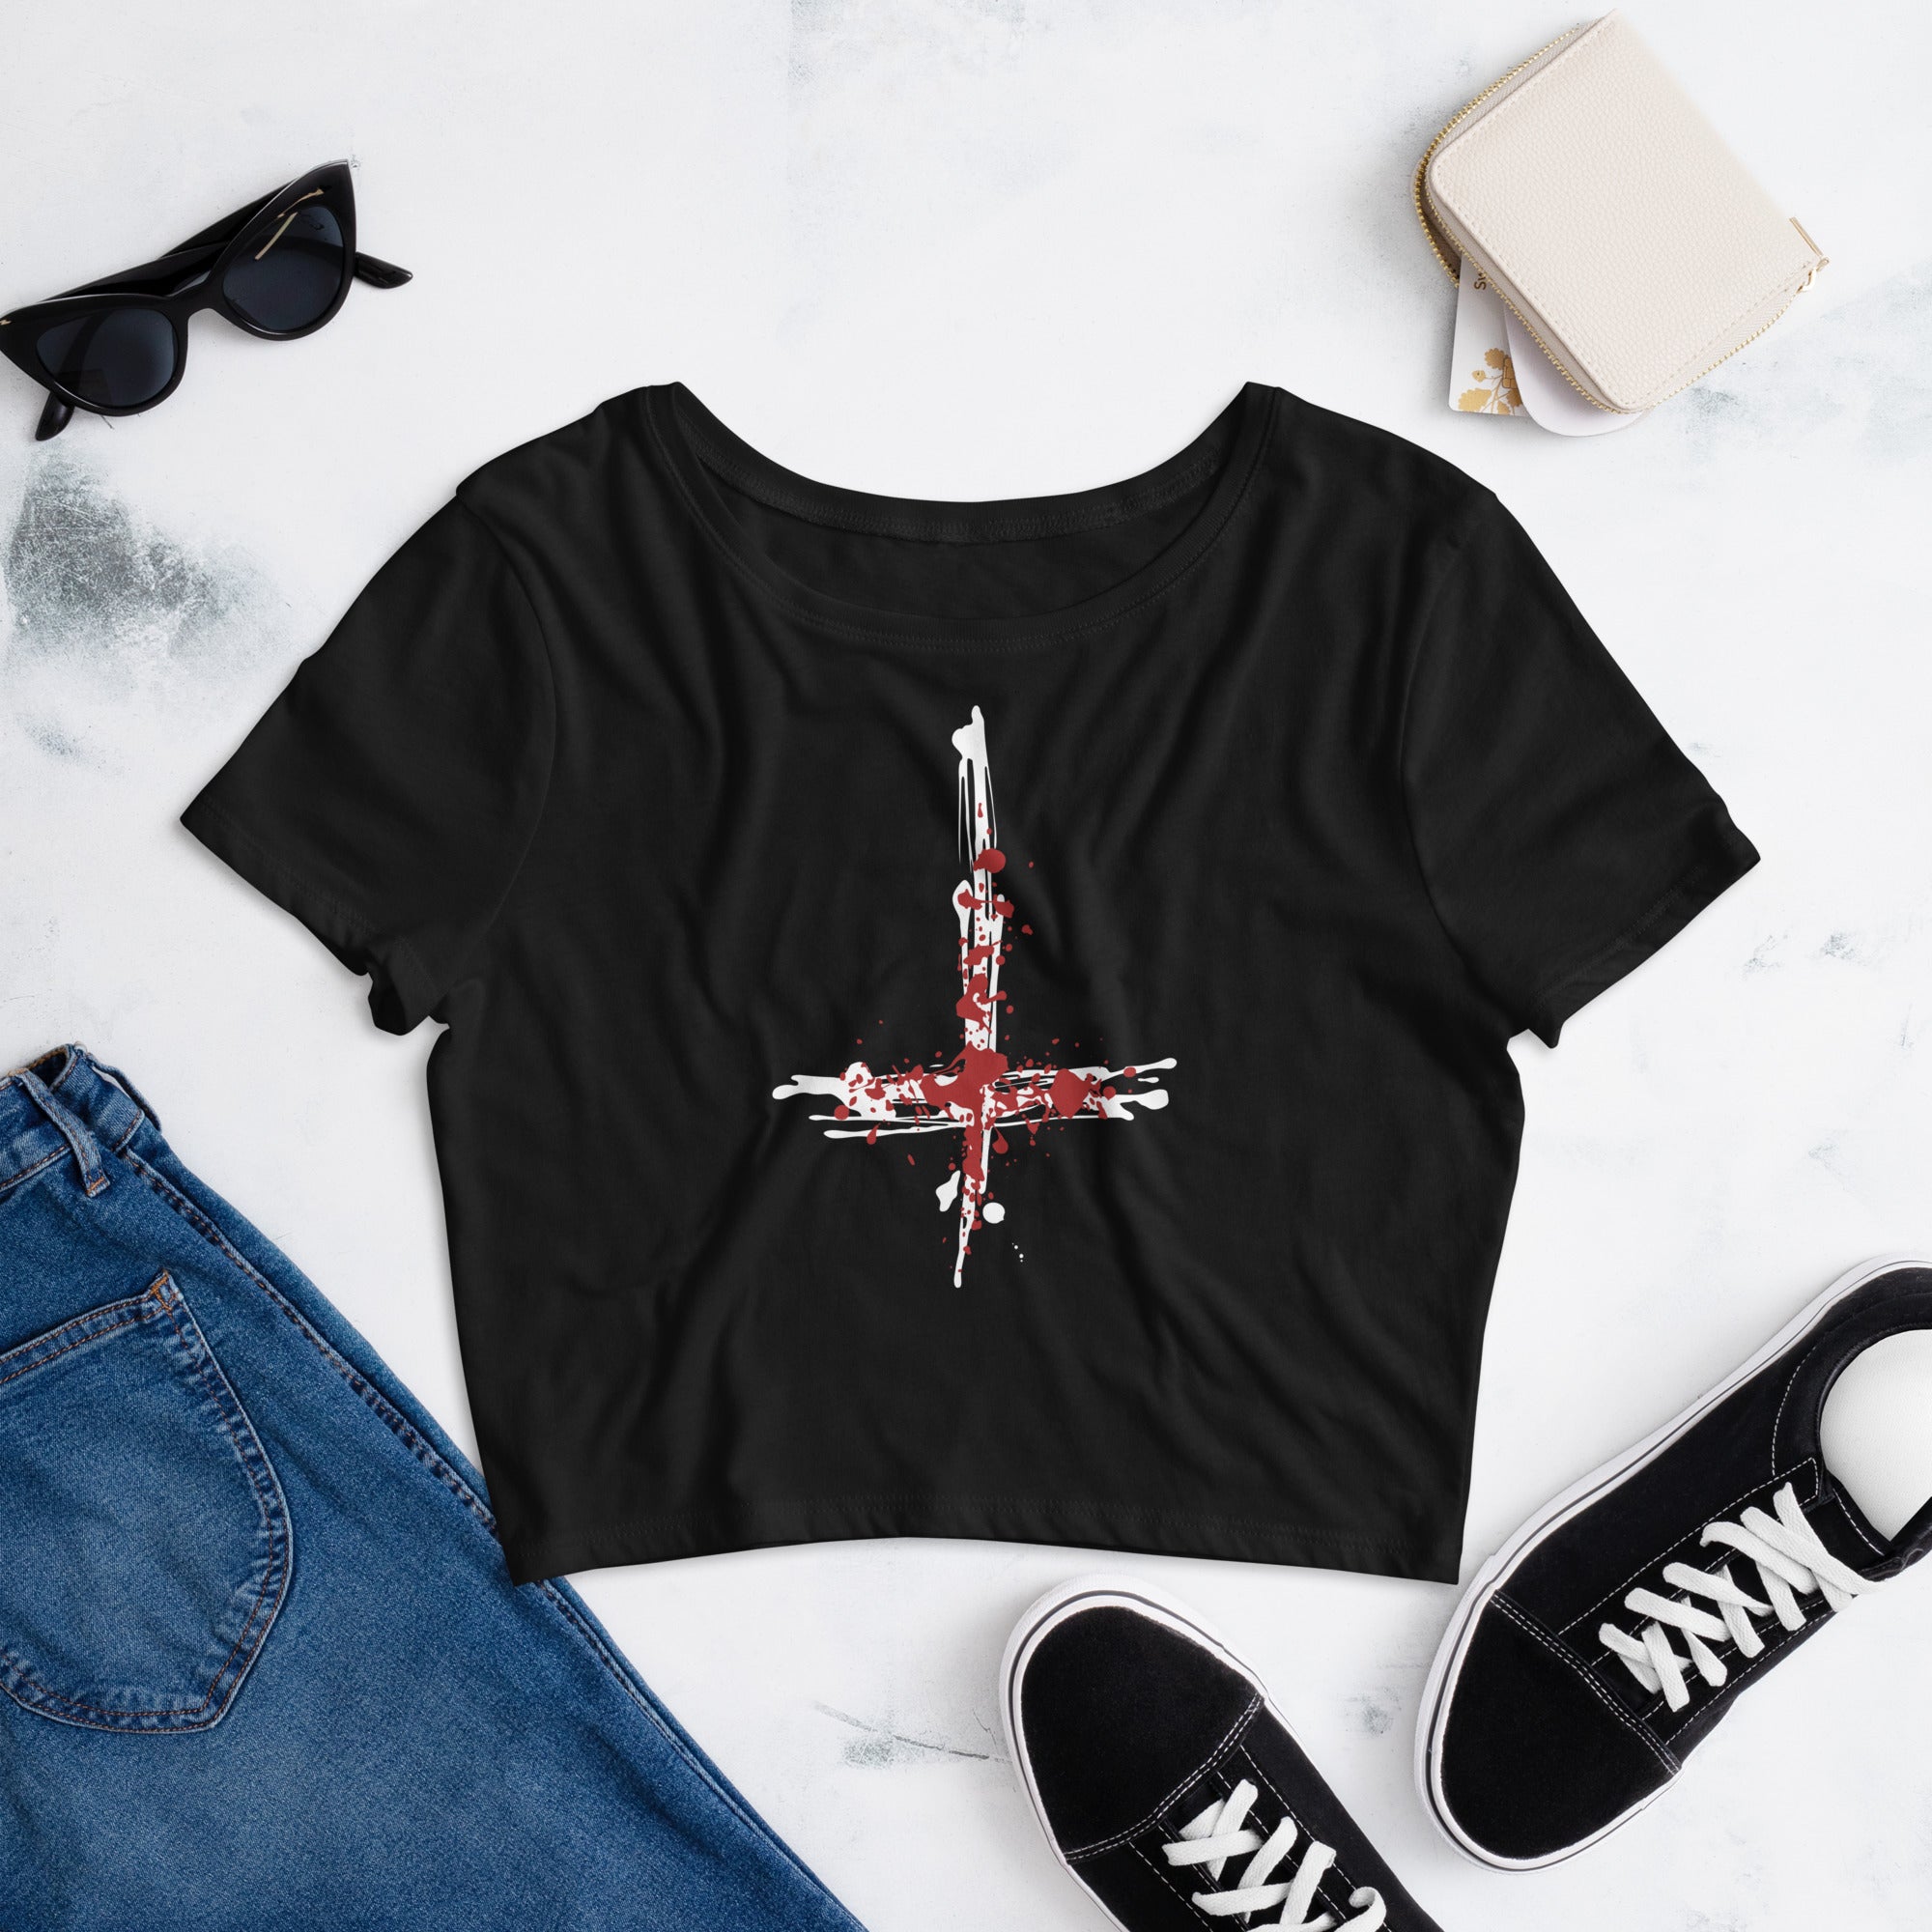 Inverted Cross Blood of Christ Women’s Crop Tee Shirt - Edge of Life Designs